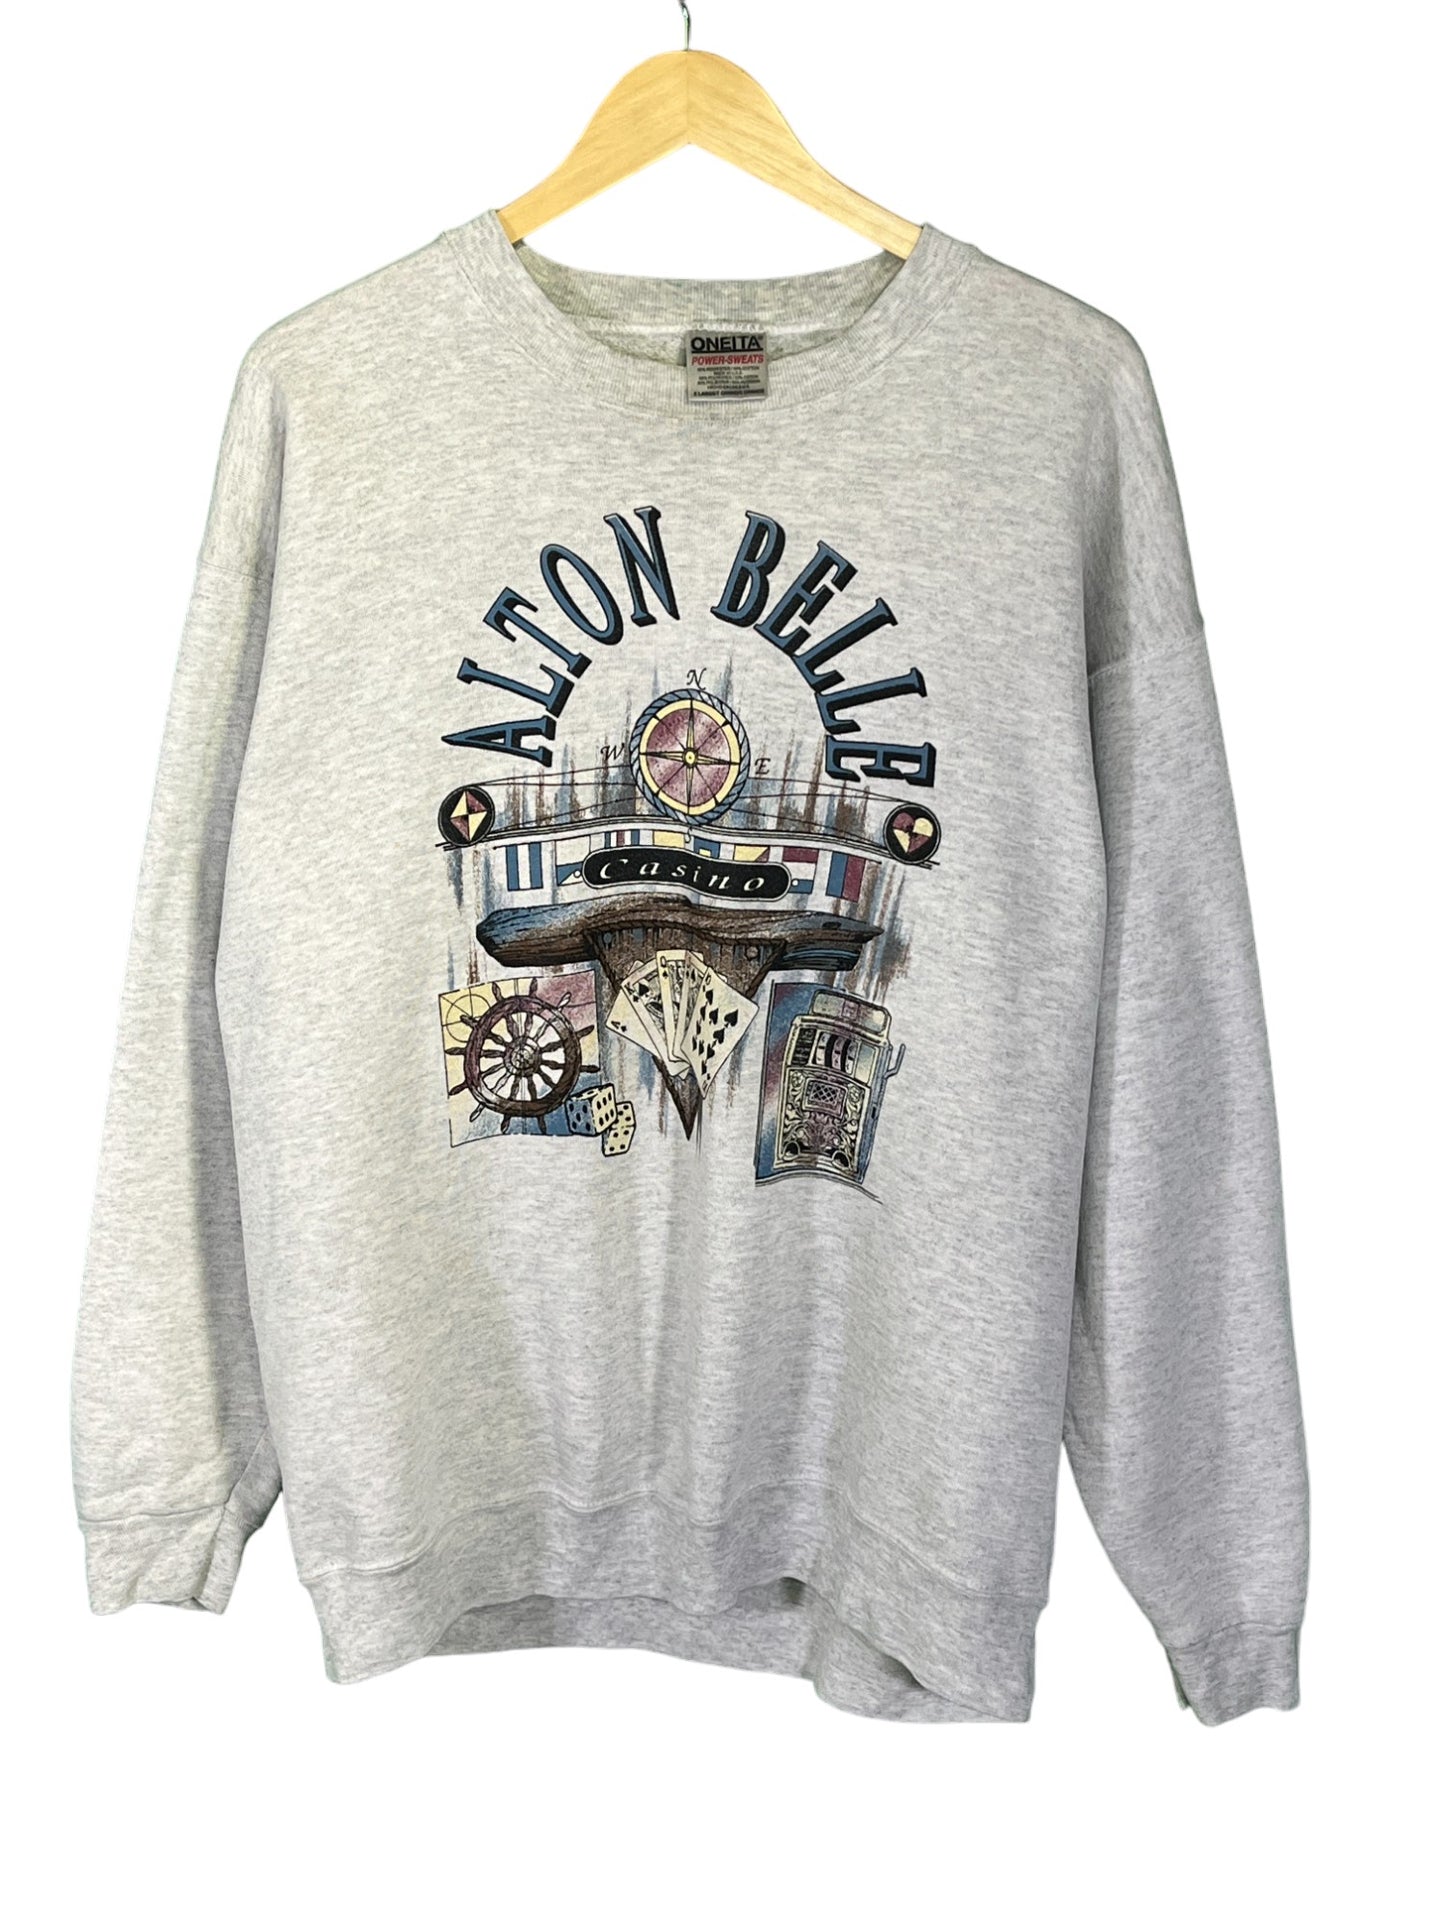 Vintage 90's Oneita Alton Belle Casino Crewneck Sweater Size XL